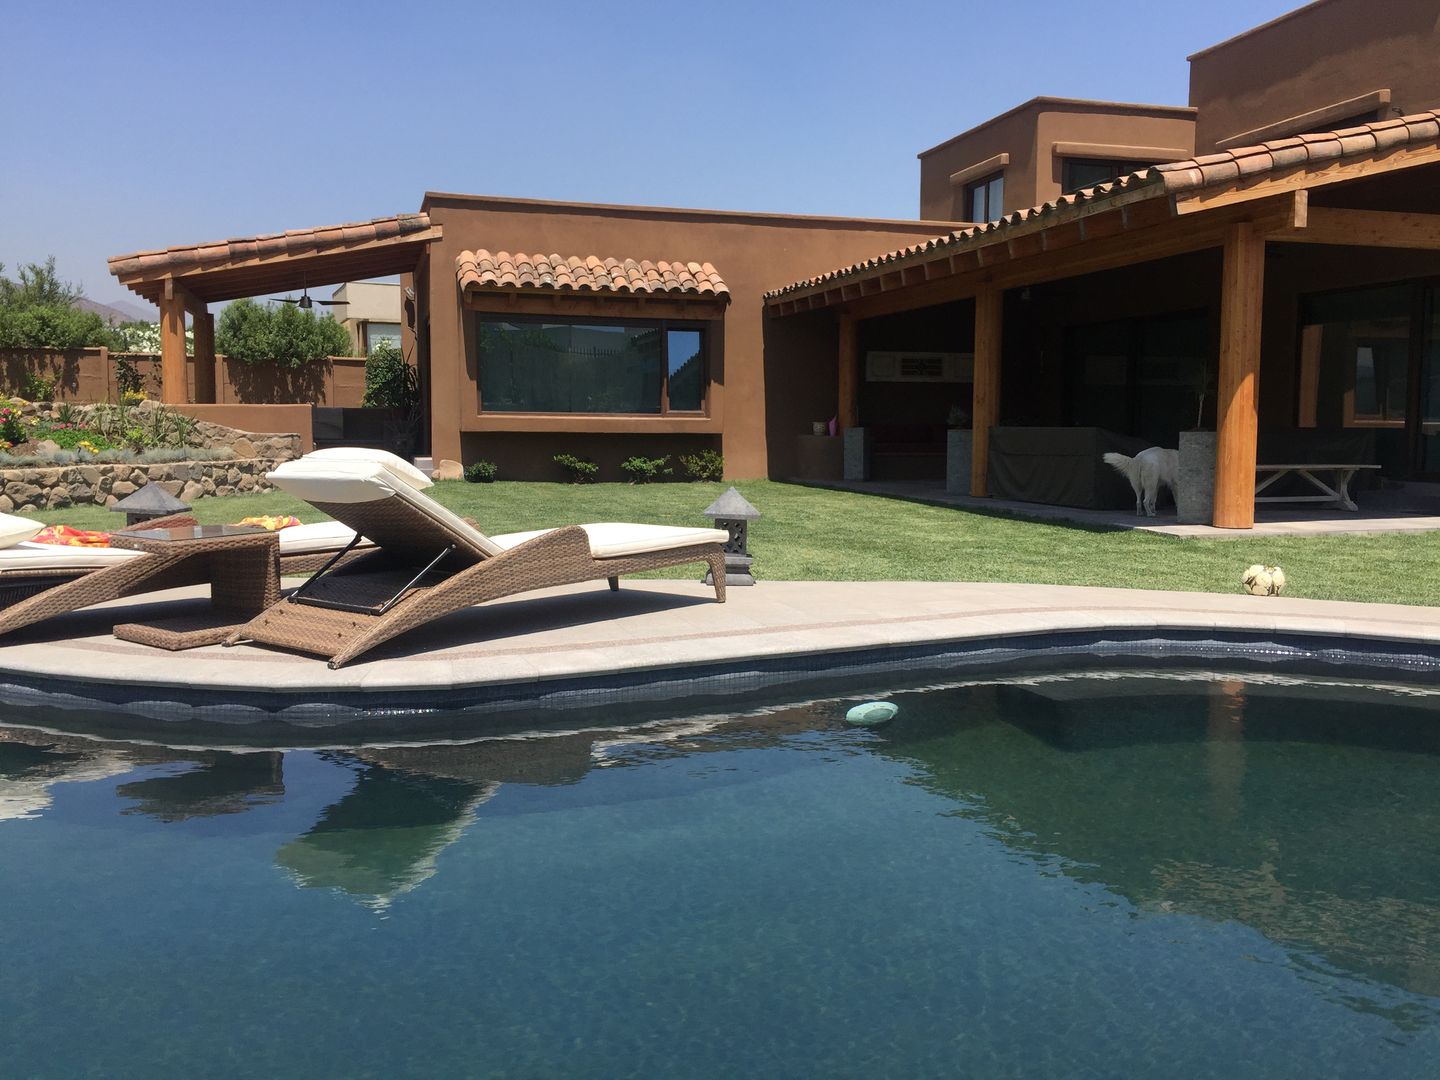 Casa mediterránea con piscina natural homify Casas de estilo mediterráneo